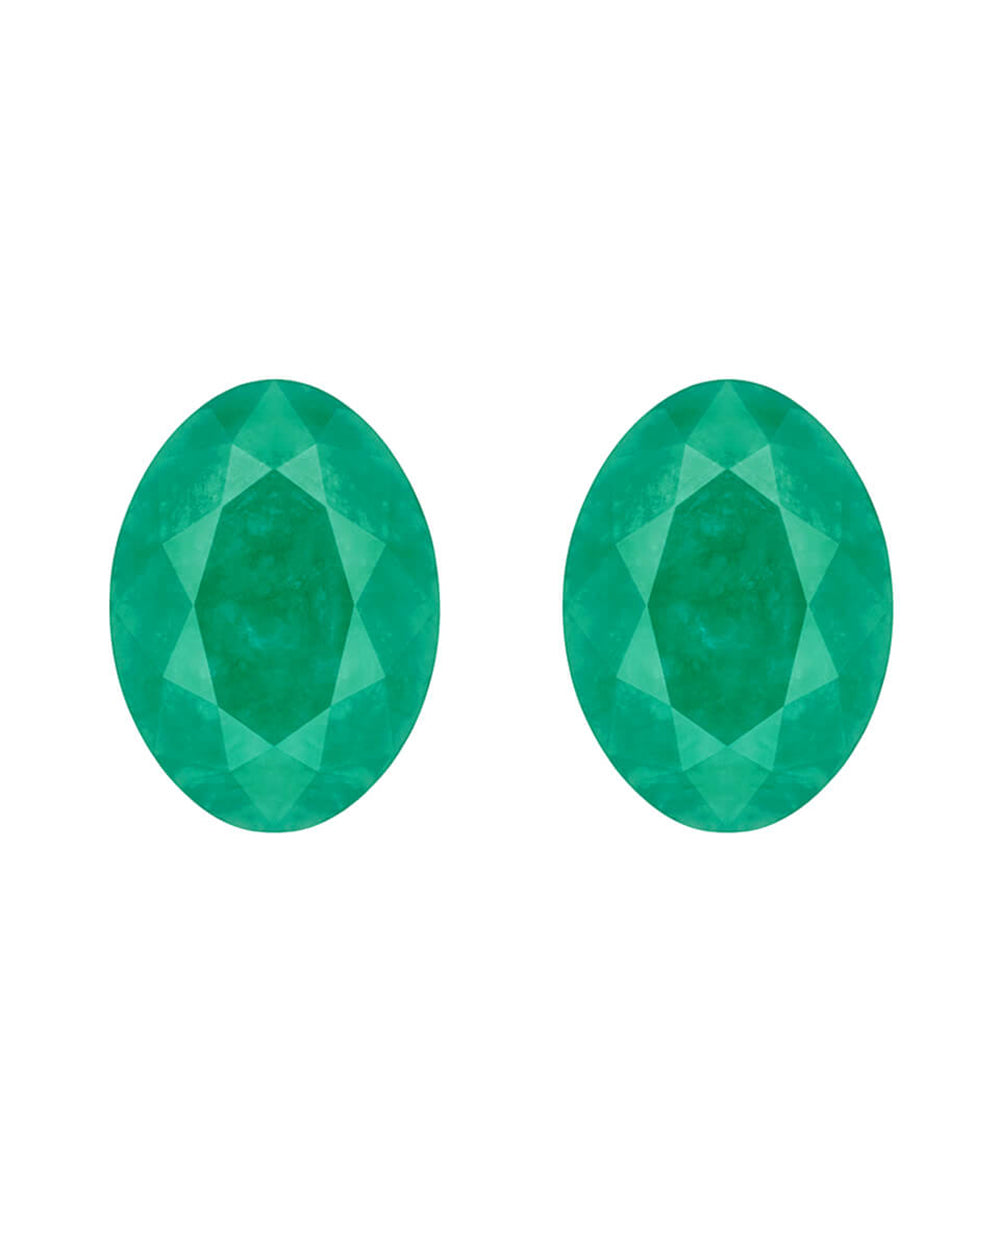 OC10 Chrysopras earrings